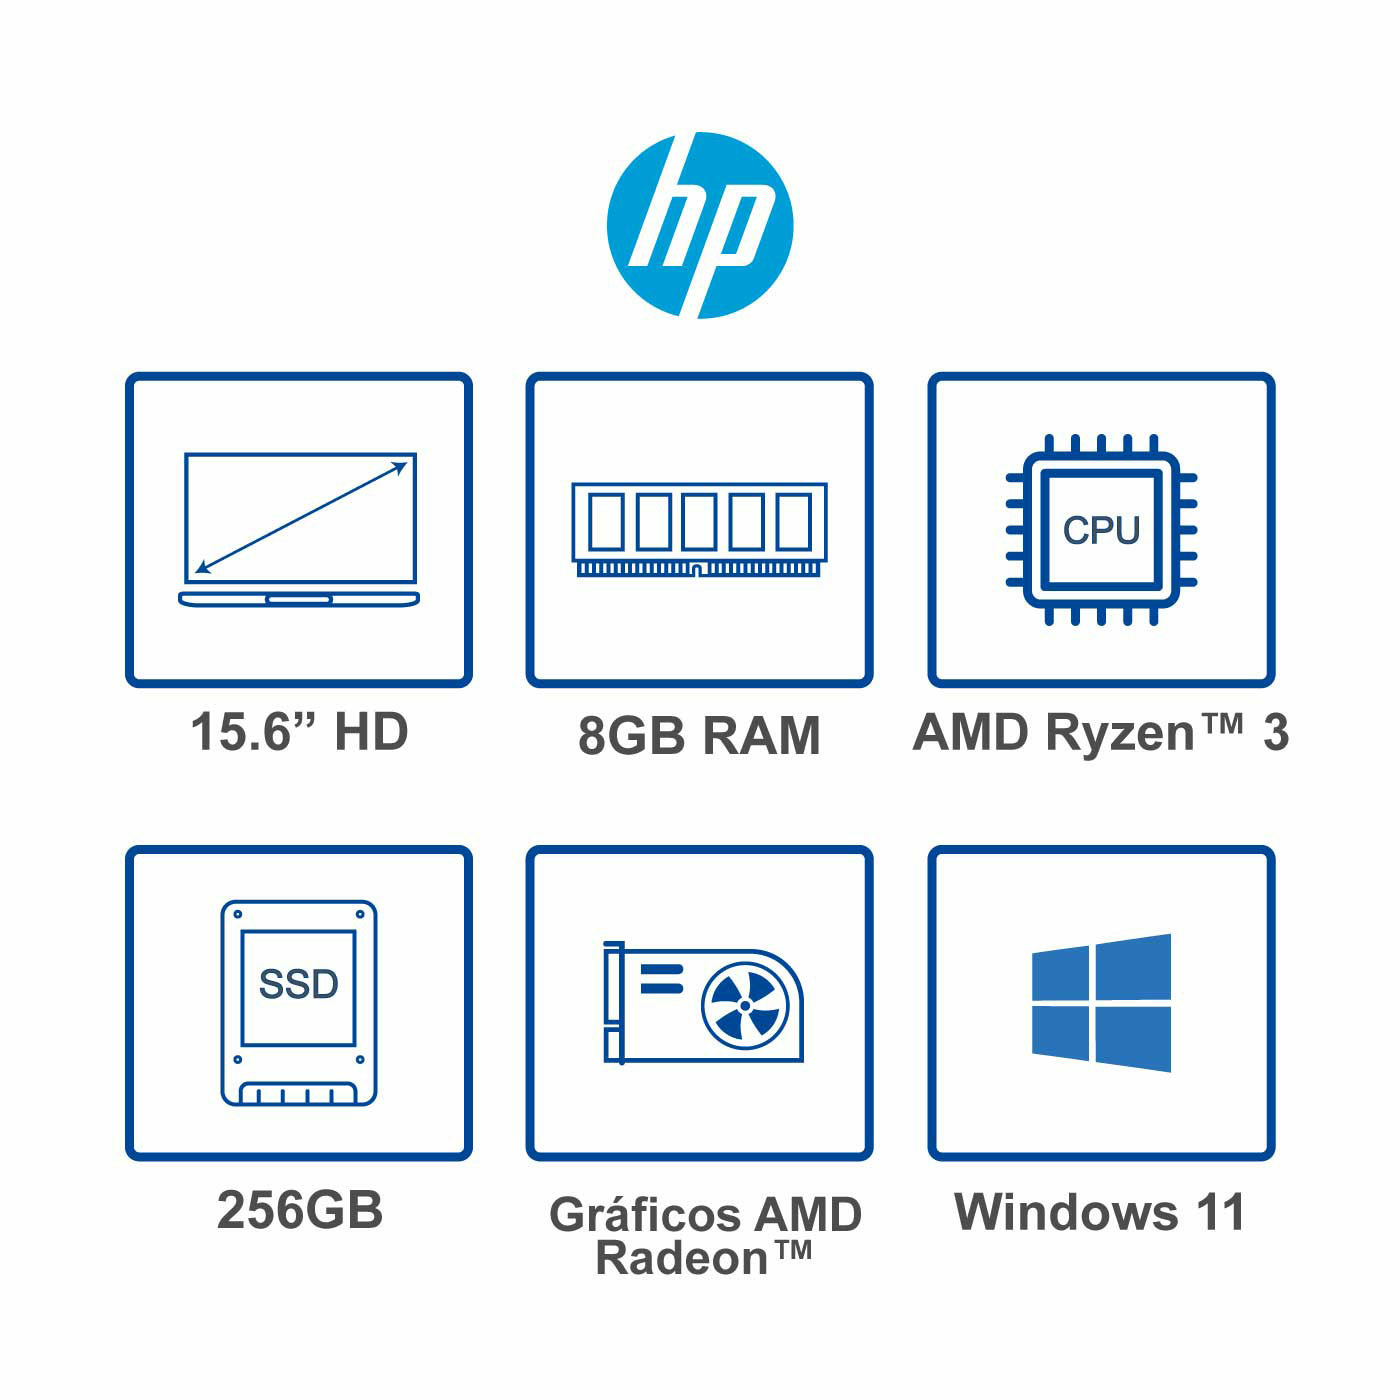 Computador Portátil HP 15.6" Pulgadas ef2512la - AMD Ryzen 3 - RAM 8GB - Disco SSD 256 GB - Gris